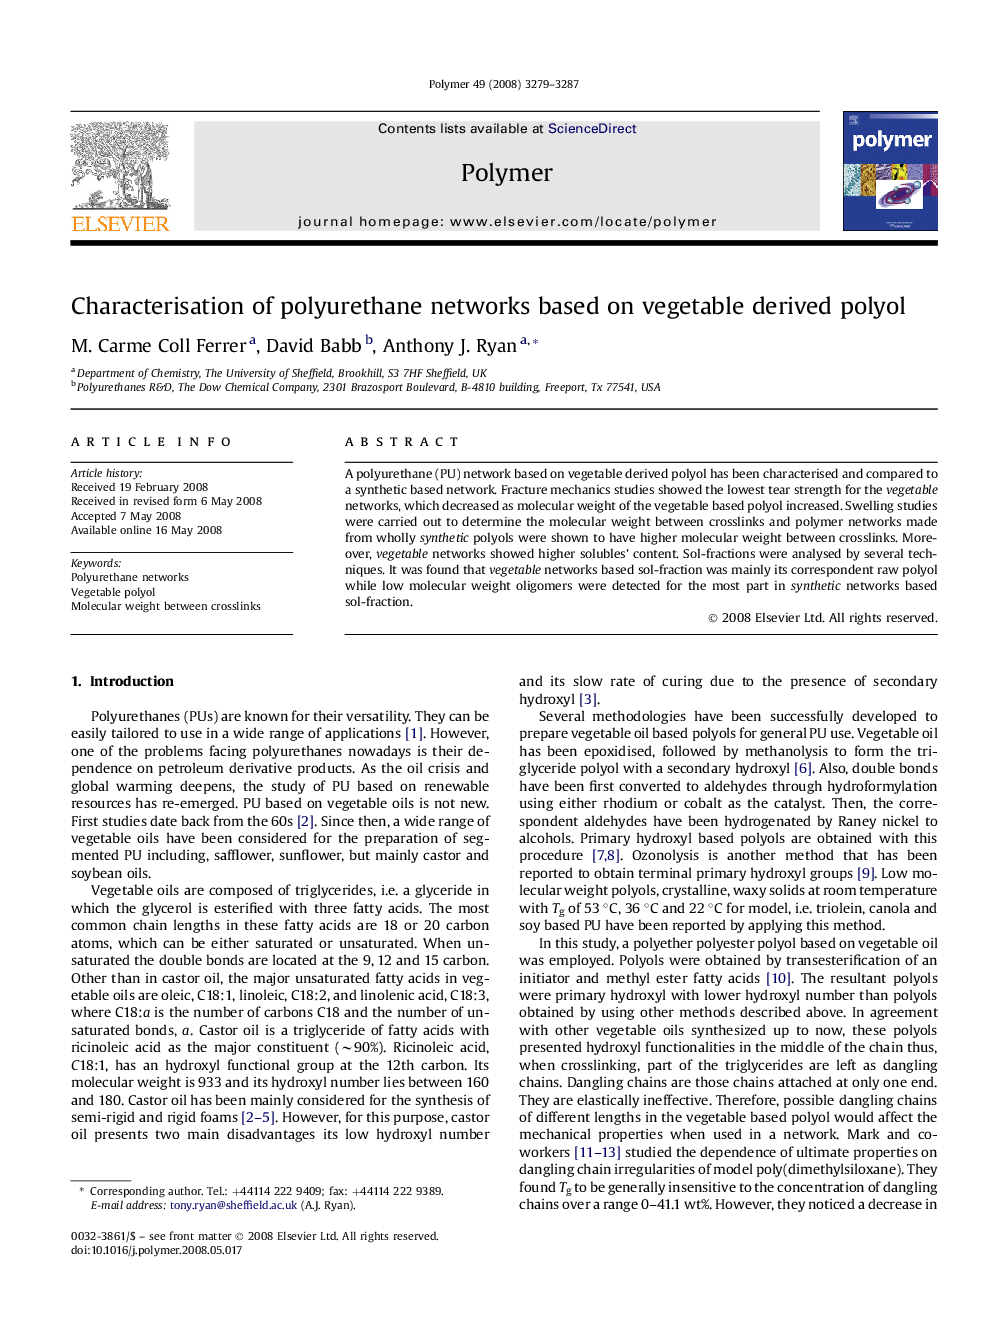 Characterisation of polyurethane networks based on vegetable derived polyol